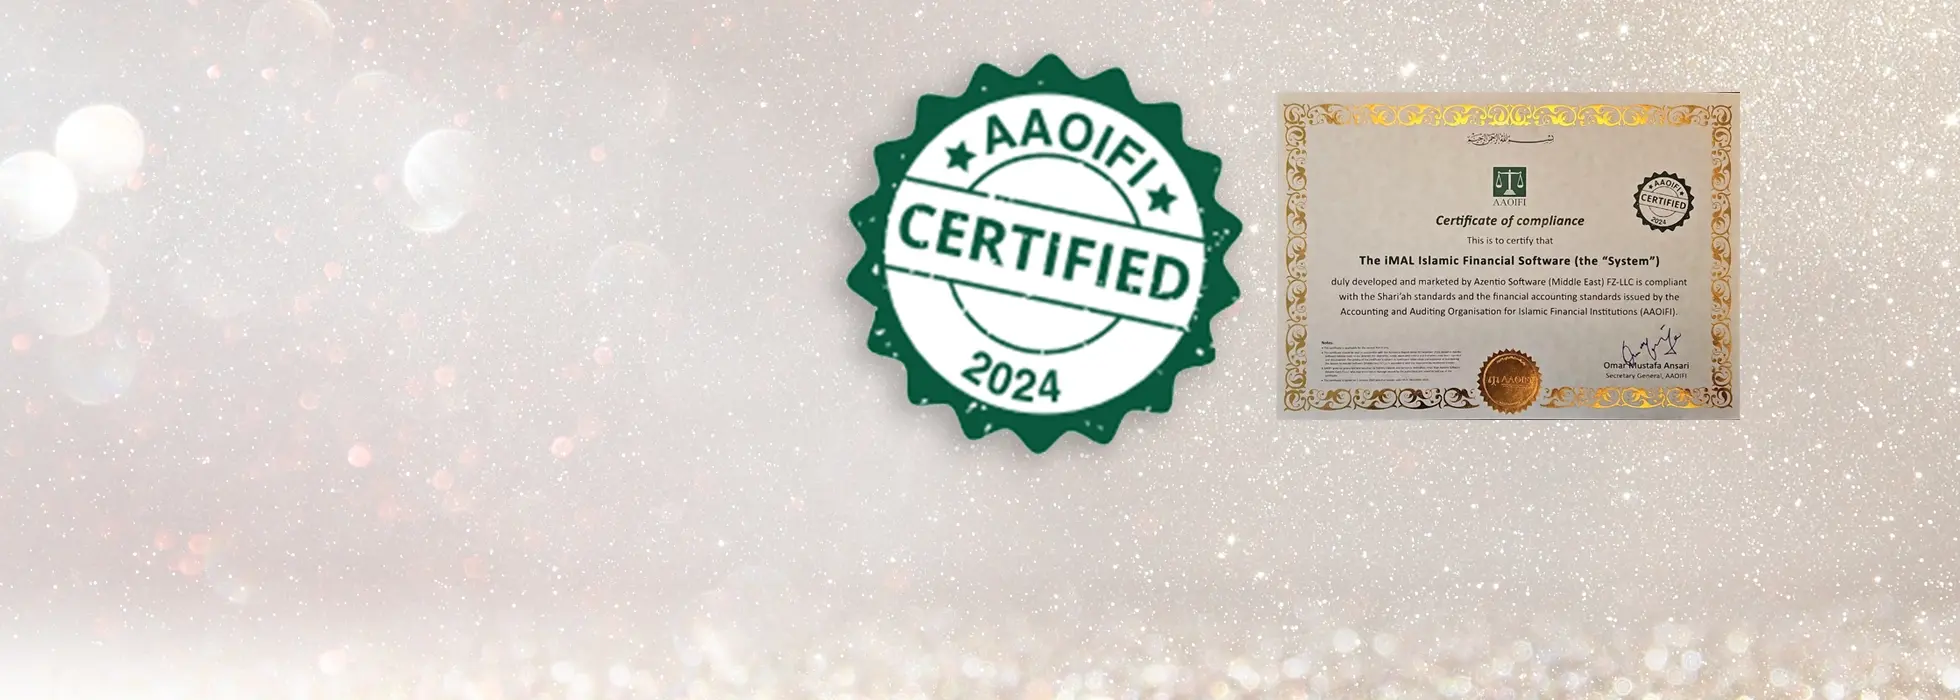 AAOIFI Certified 2024